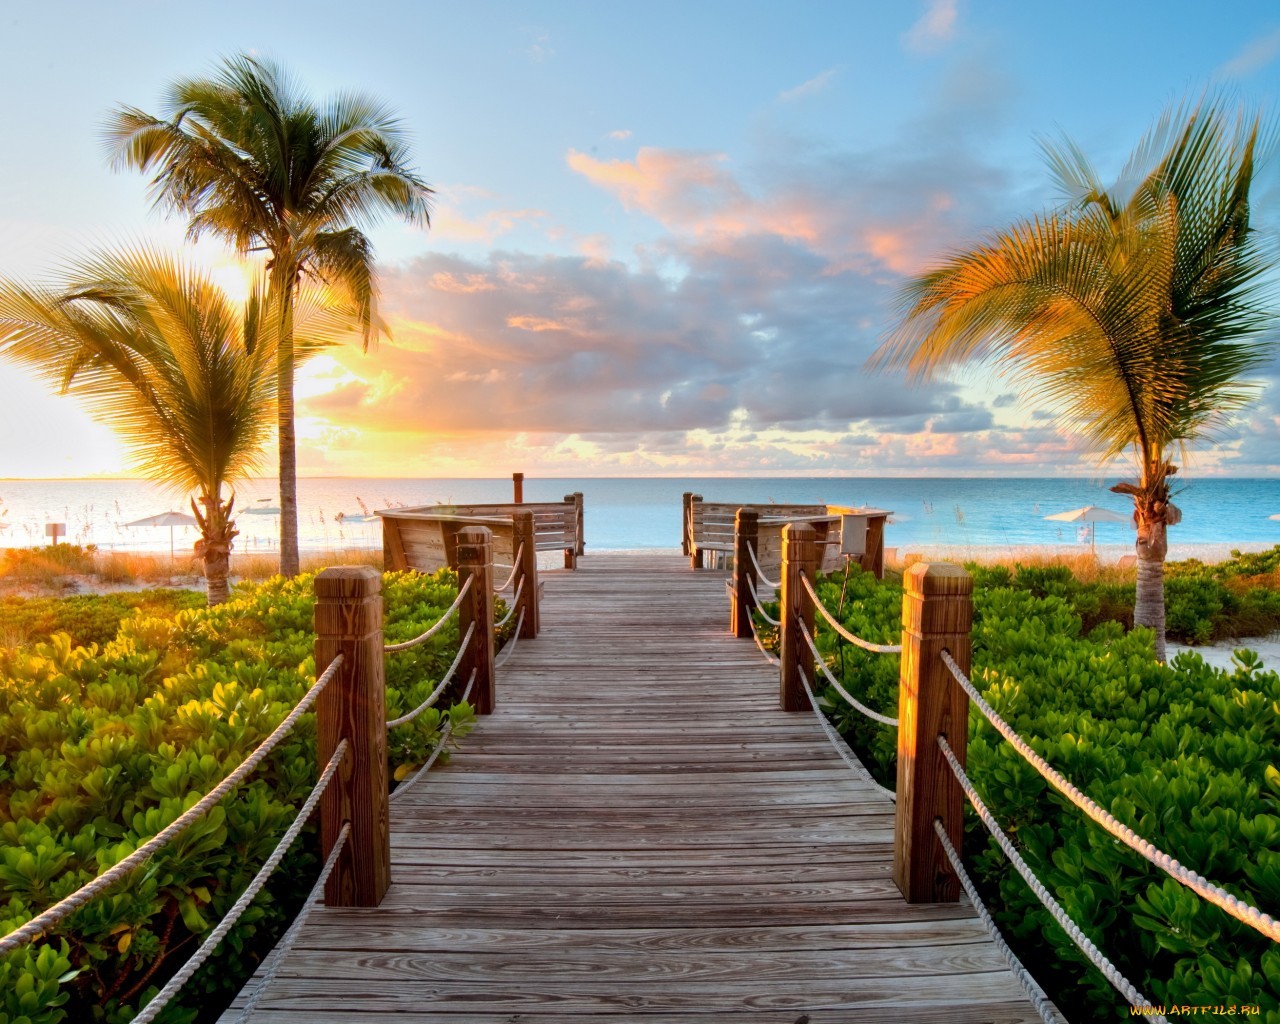 palms, sea, beach, landscape, sunset wallpaper for mobile